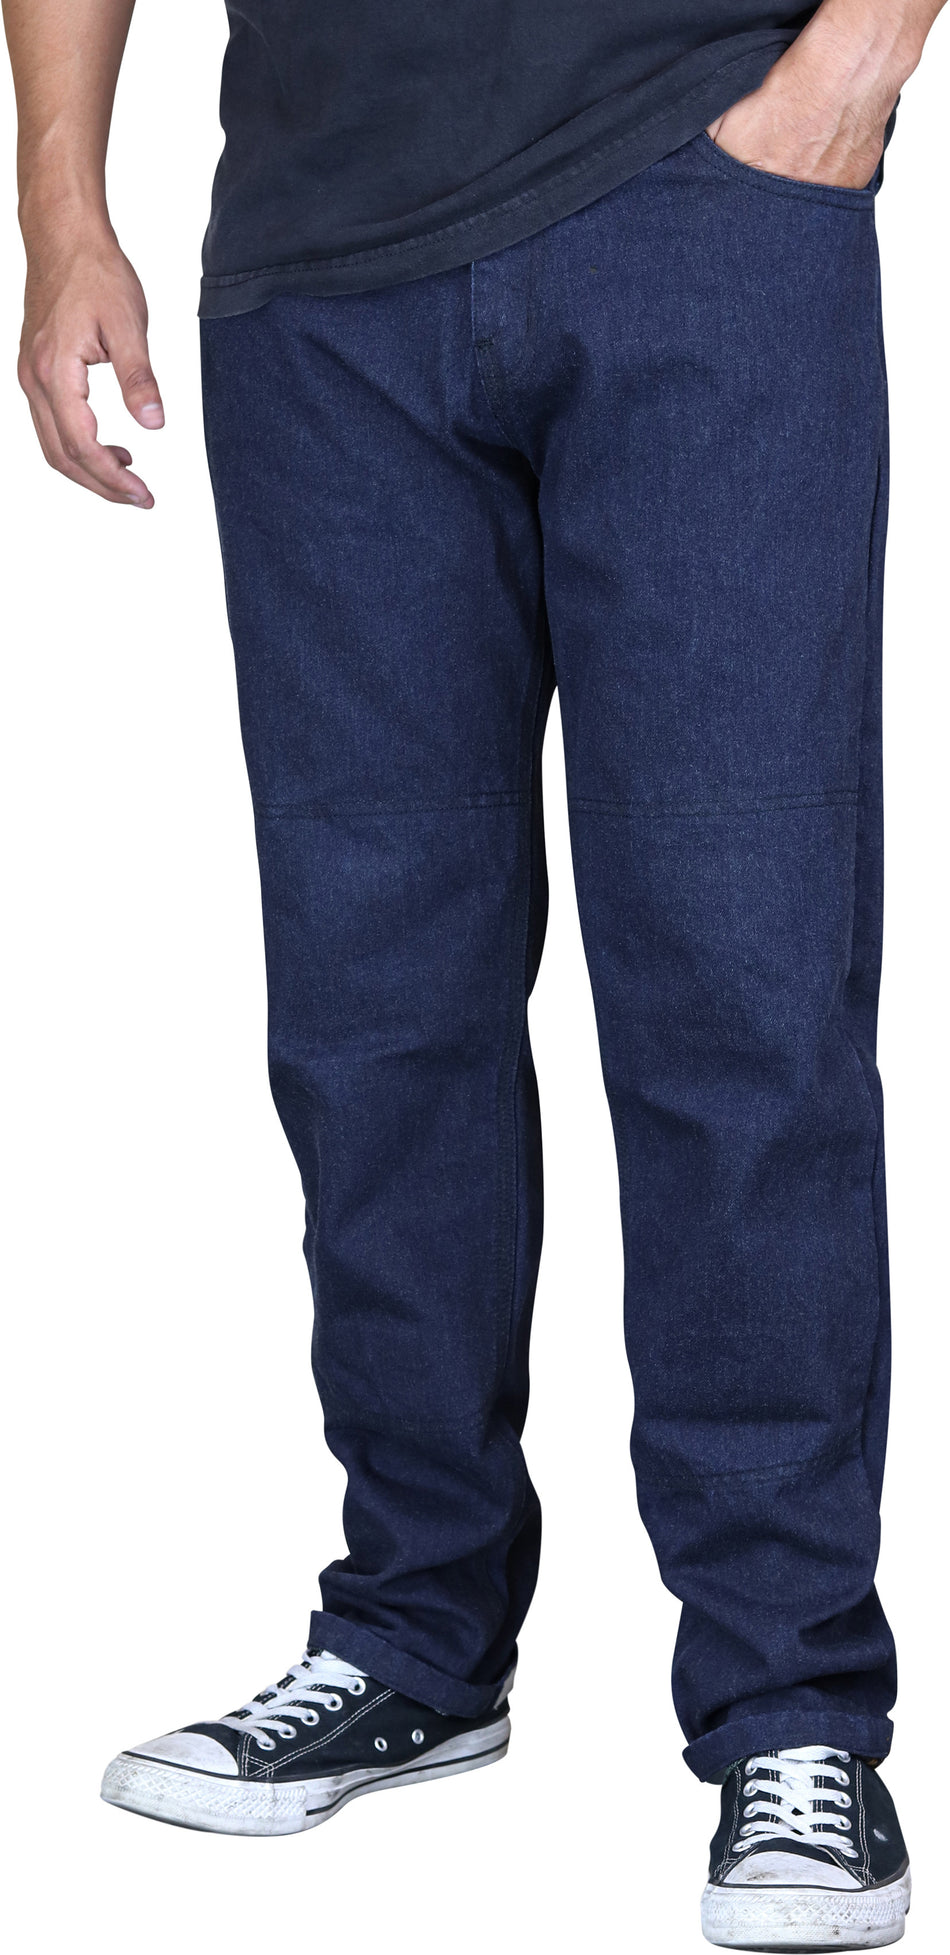 SCORPION EXO Covert Ultra Jeans Blue Size 30 4402-30